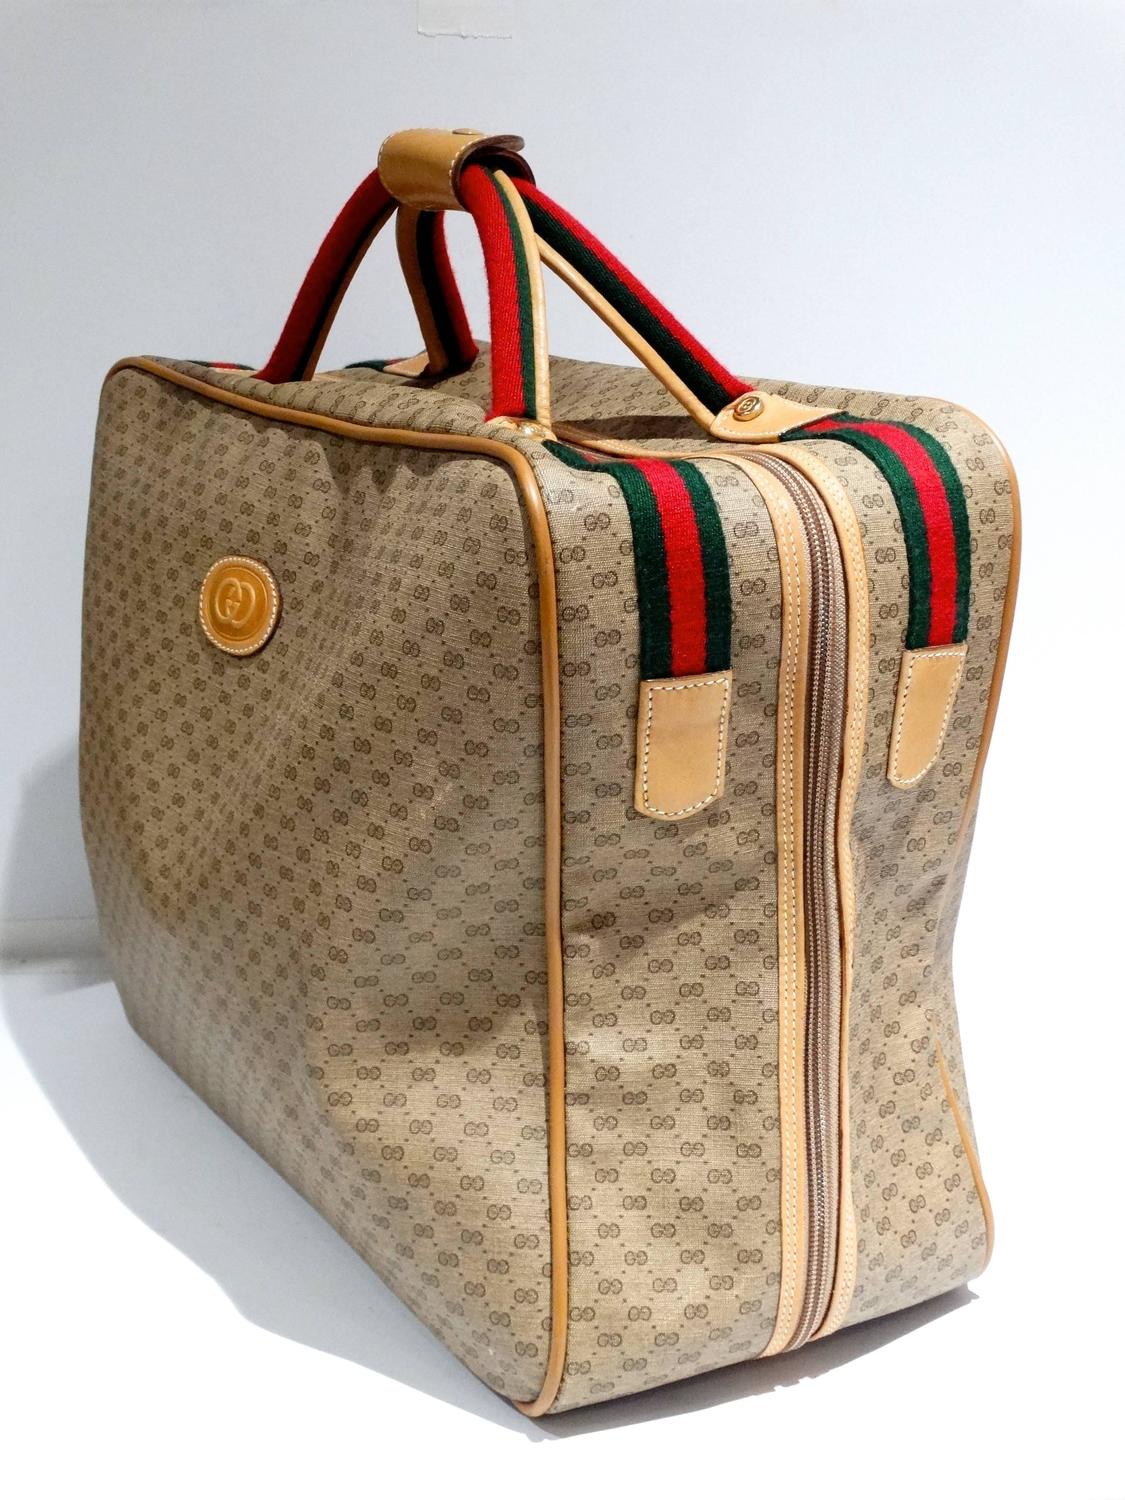 1980s Gucci Weekender Bag at 1stdibs